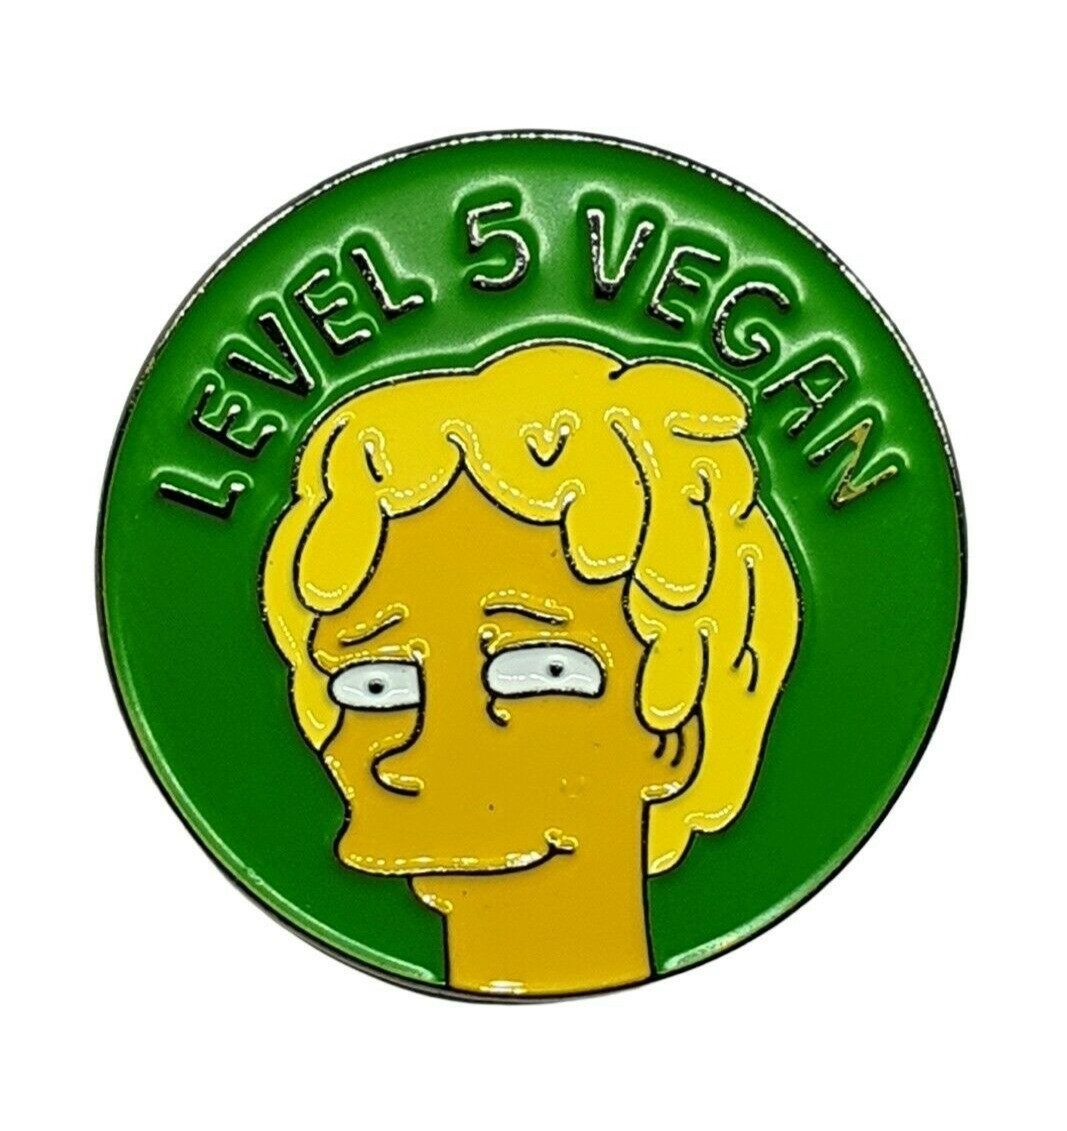 Vegan Pin Badge Level 5 Vegan Enamel Brooch Gift Quirky Fun Happy Statement